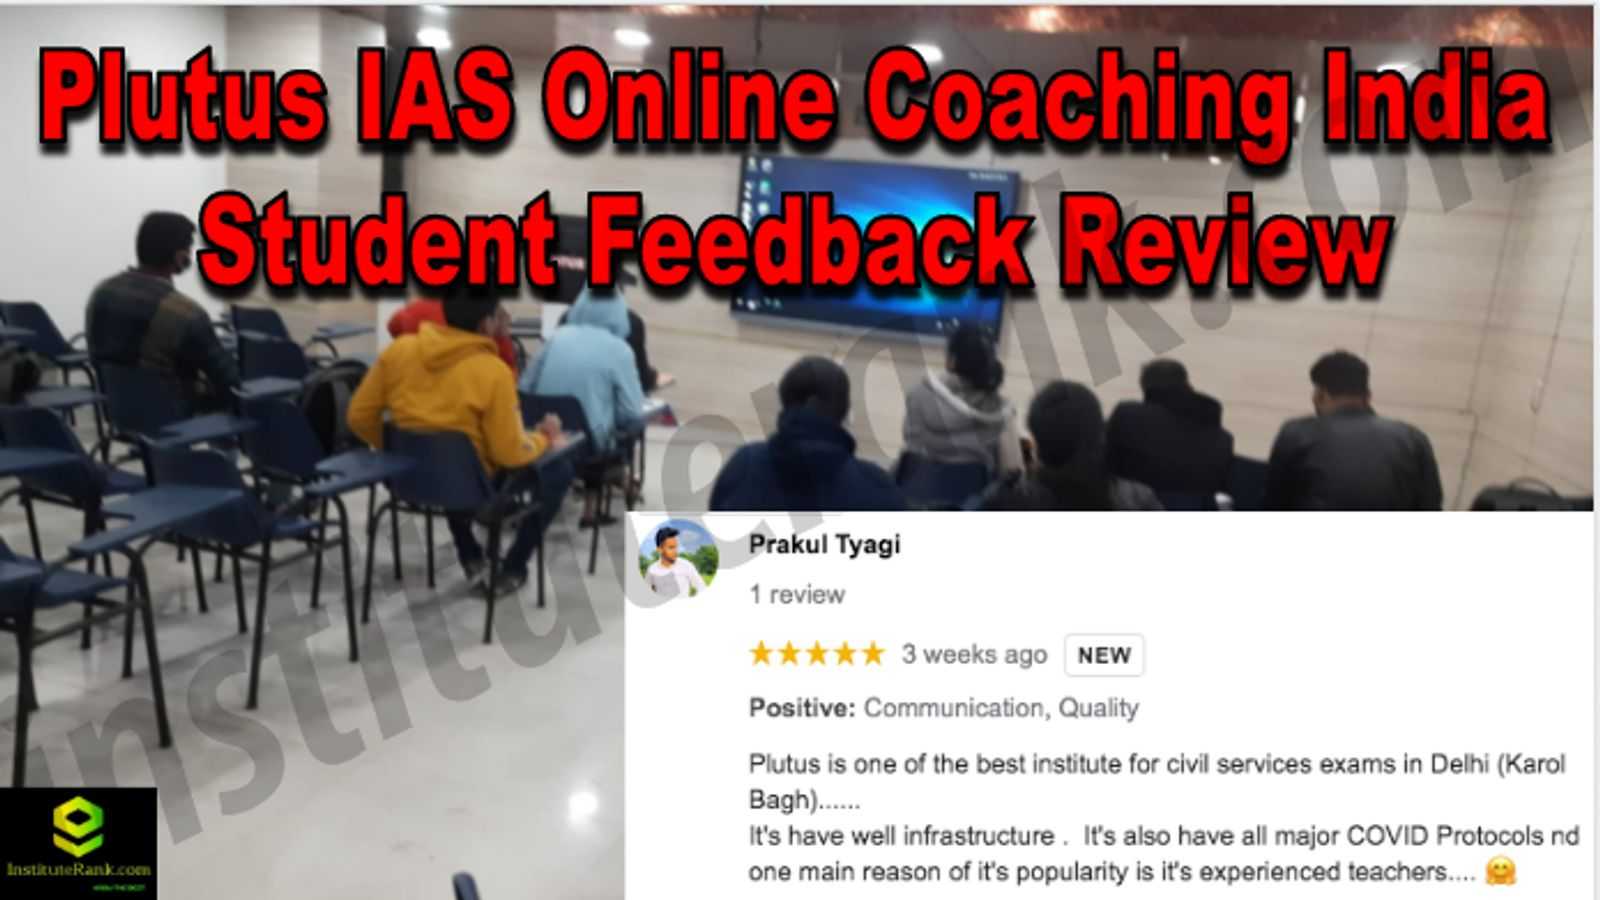 Plutus IAS Online Coaching India Student Feedback Reviews